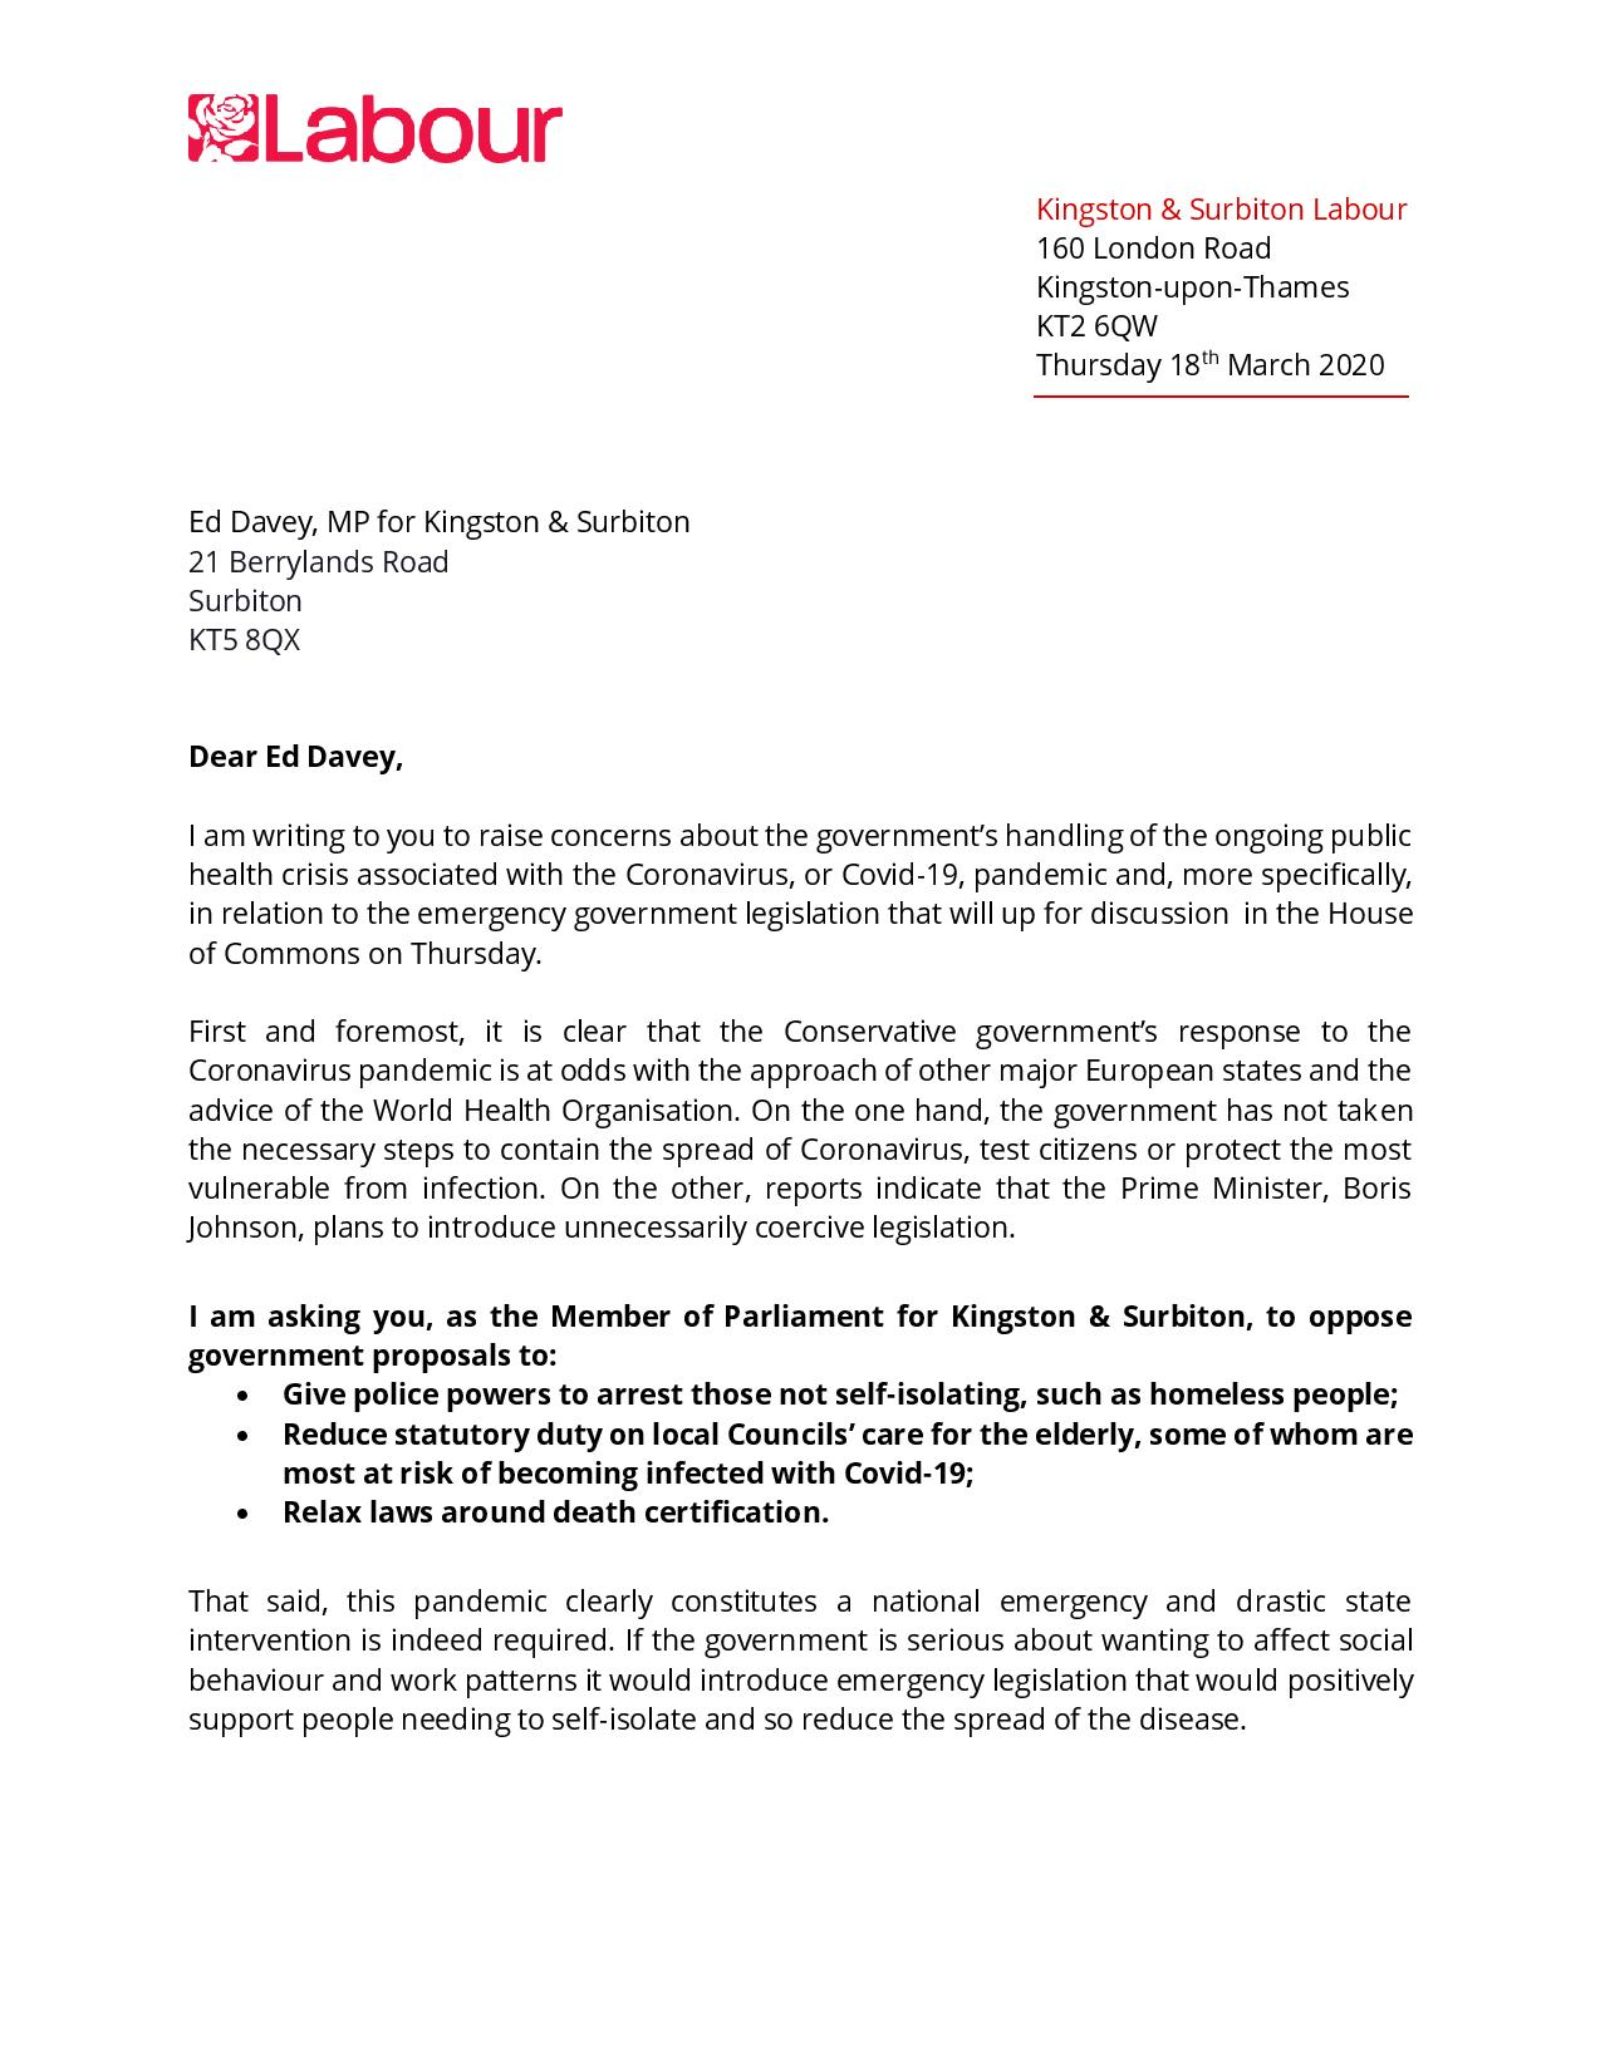 Letter to MP regarding Coronavirus Legislation